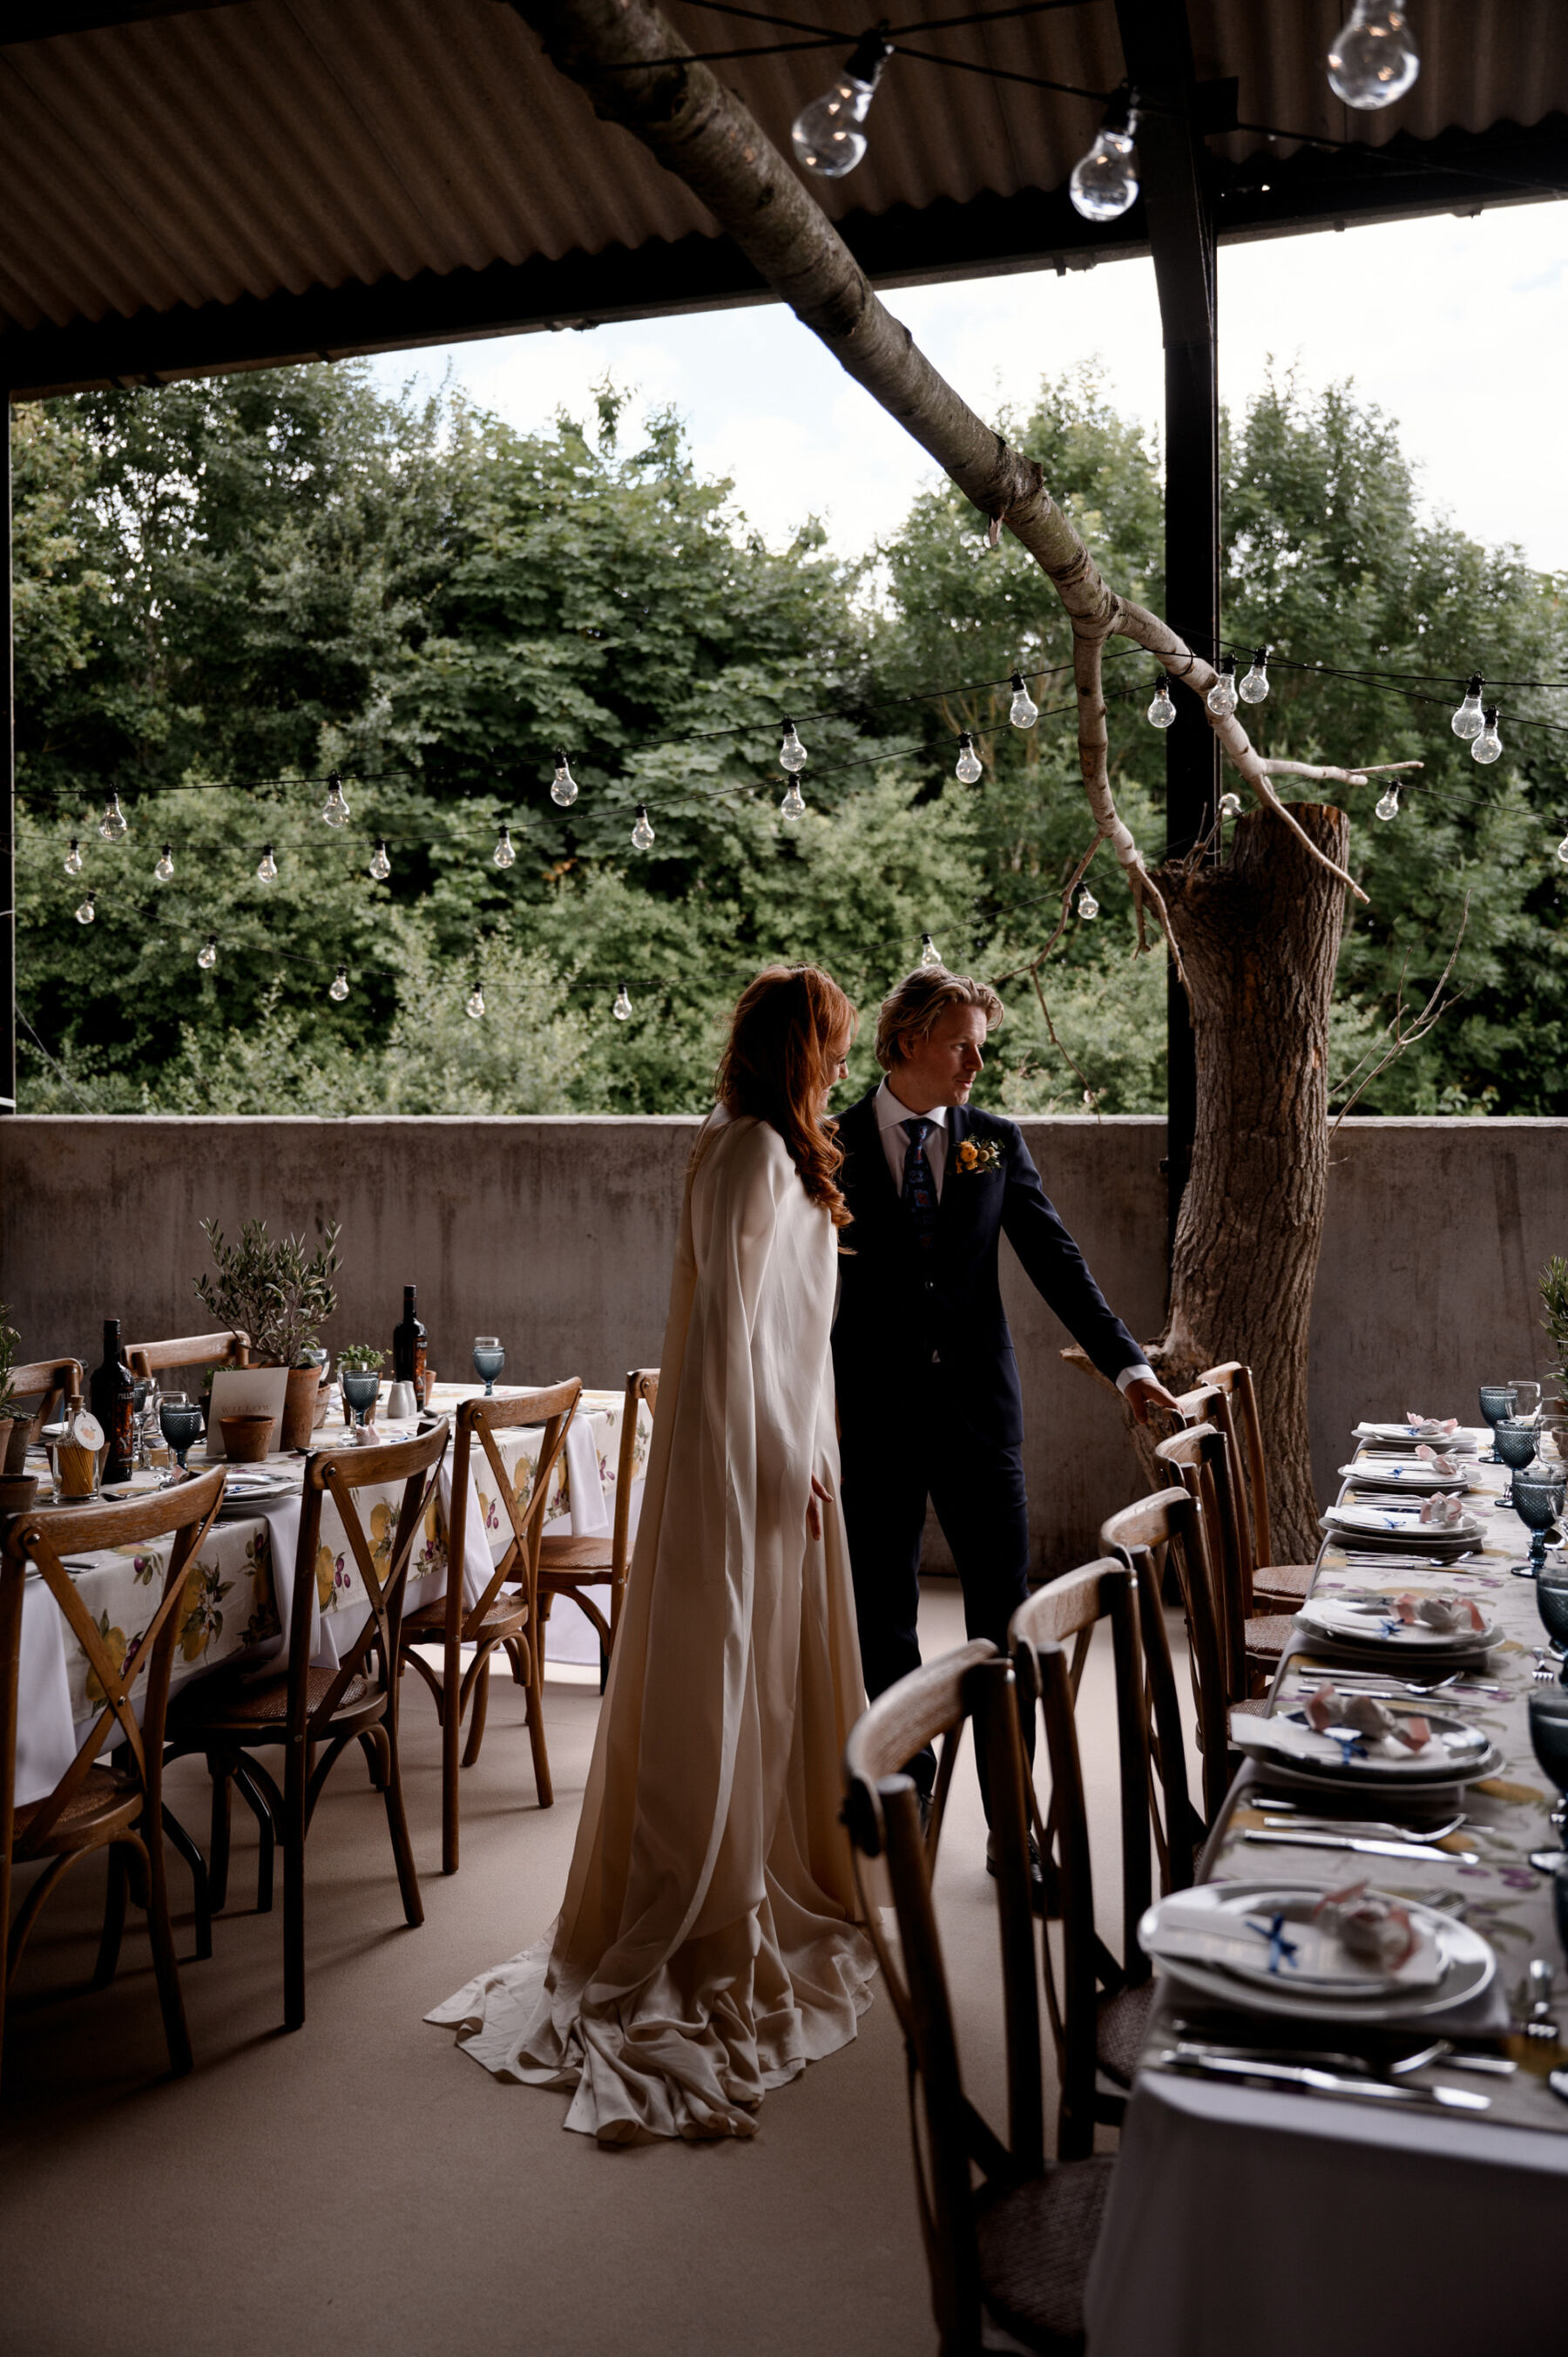 Italian inspired wedding ceremony at Manor Farm in Northamptonshire. Taylor Hughes Photography.